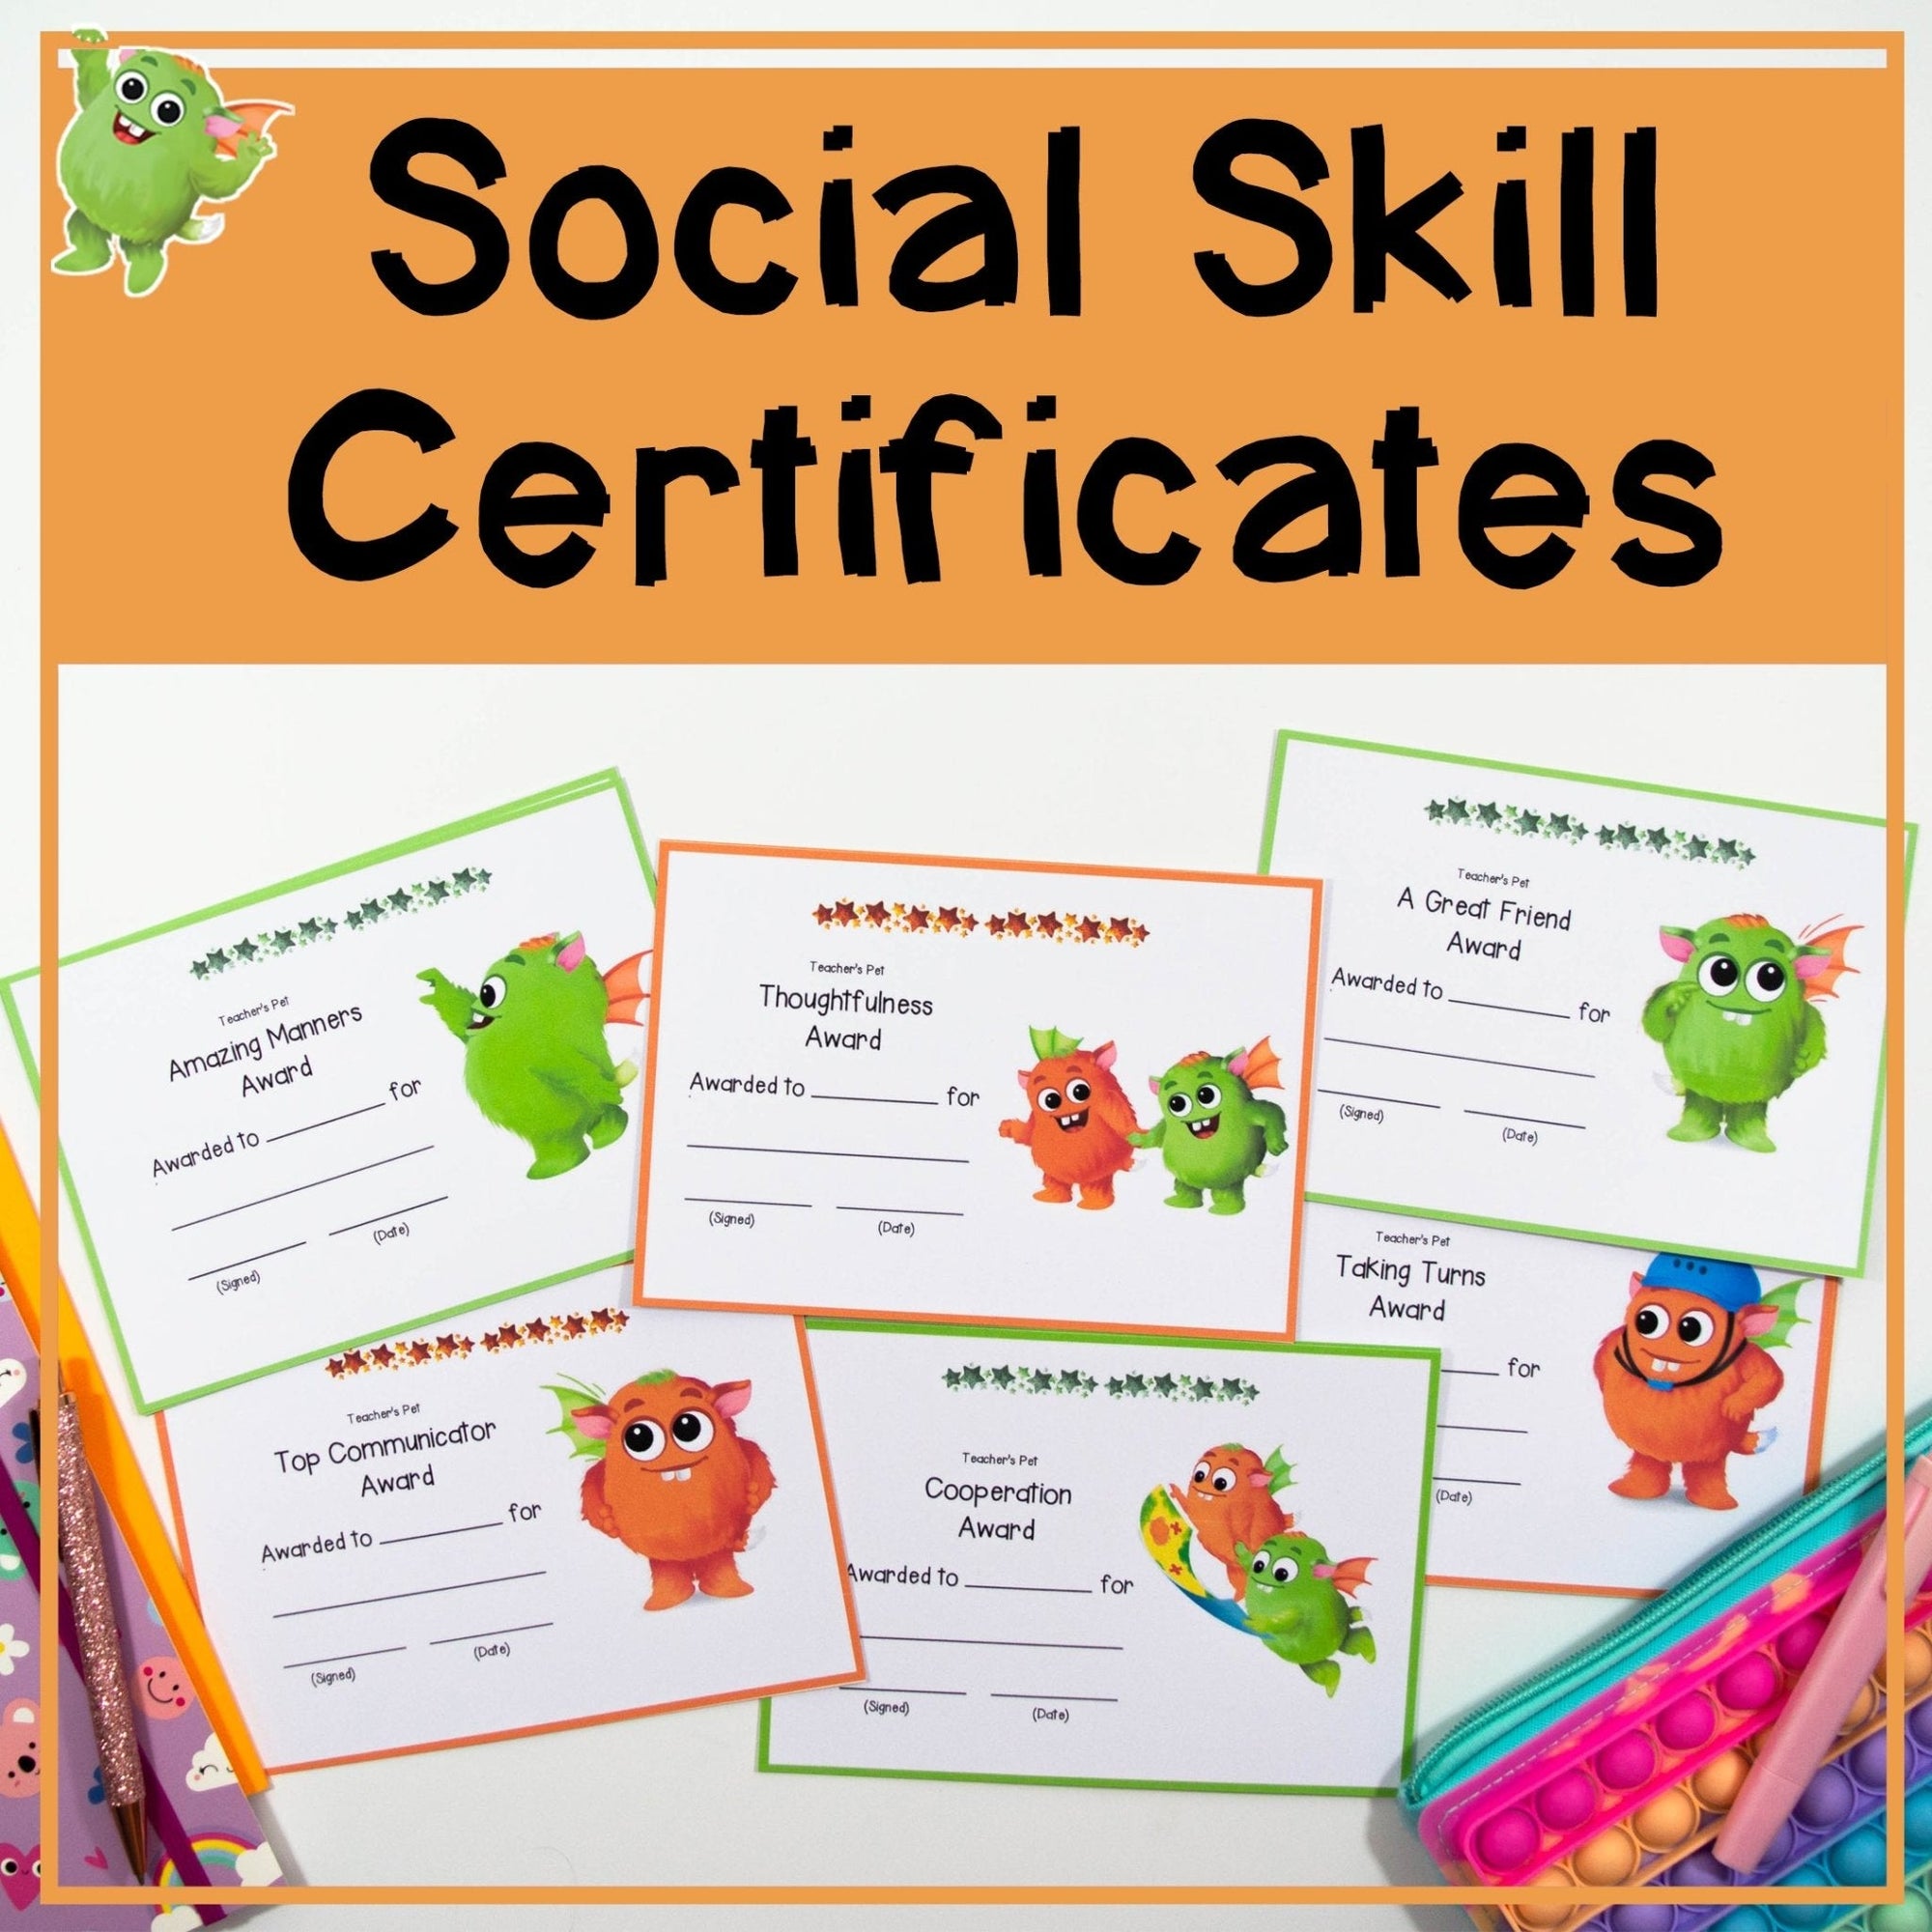 Social Skills Classroom Certificates - Your Teacher's Pet Creature